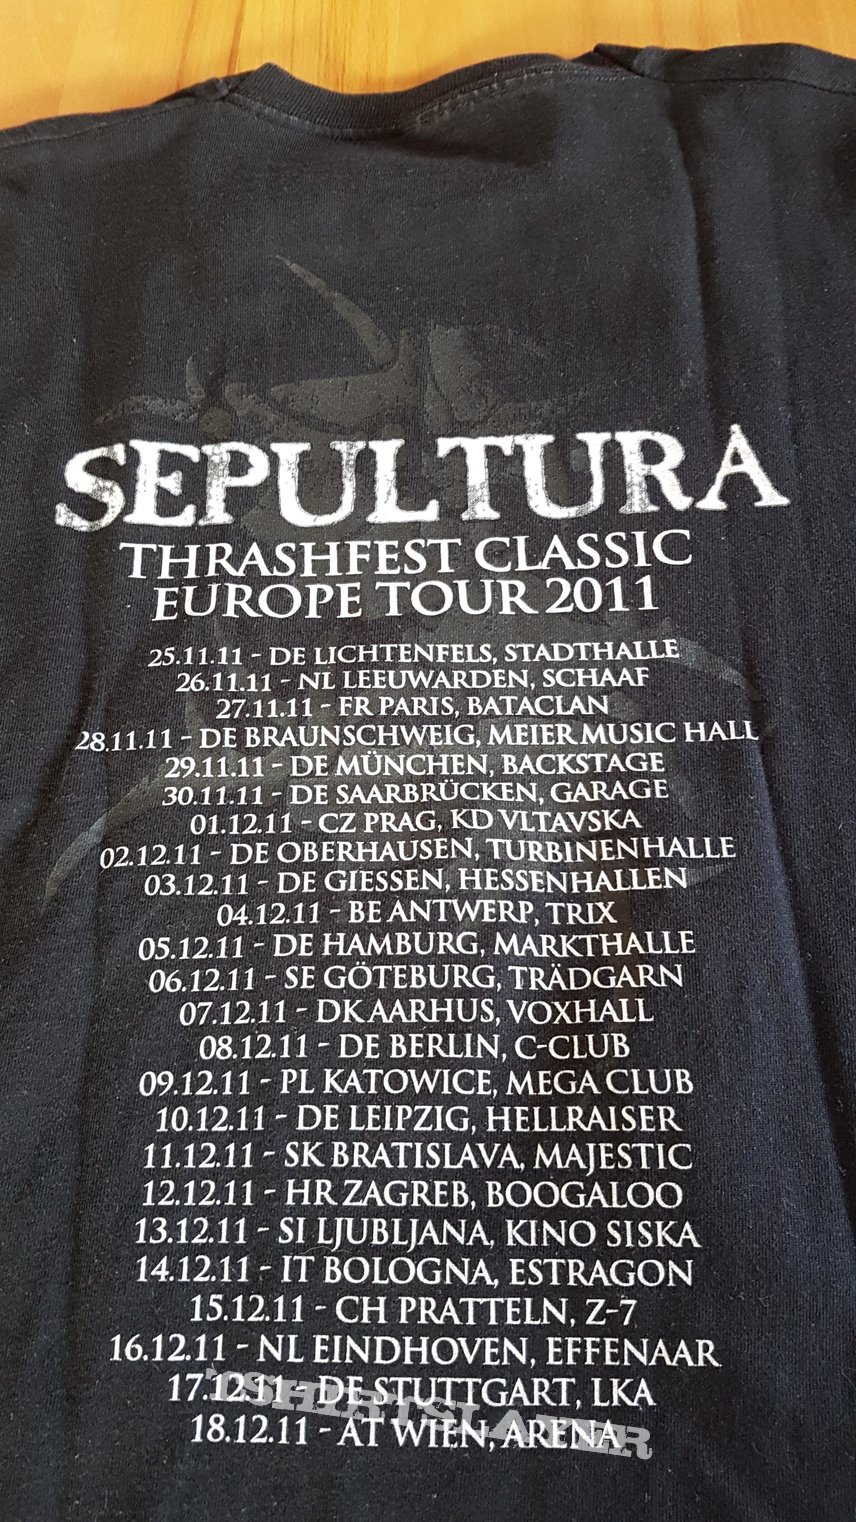 Sepultura - Trashfest Classic Europe Tour 2011